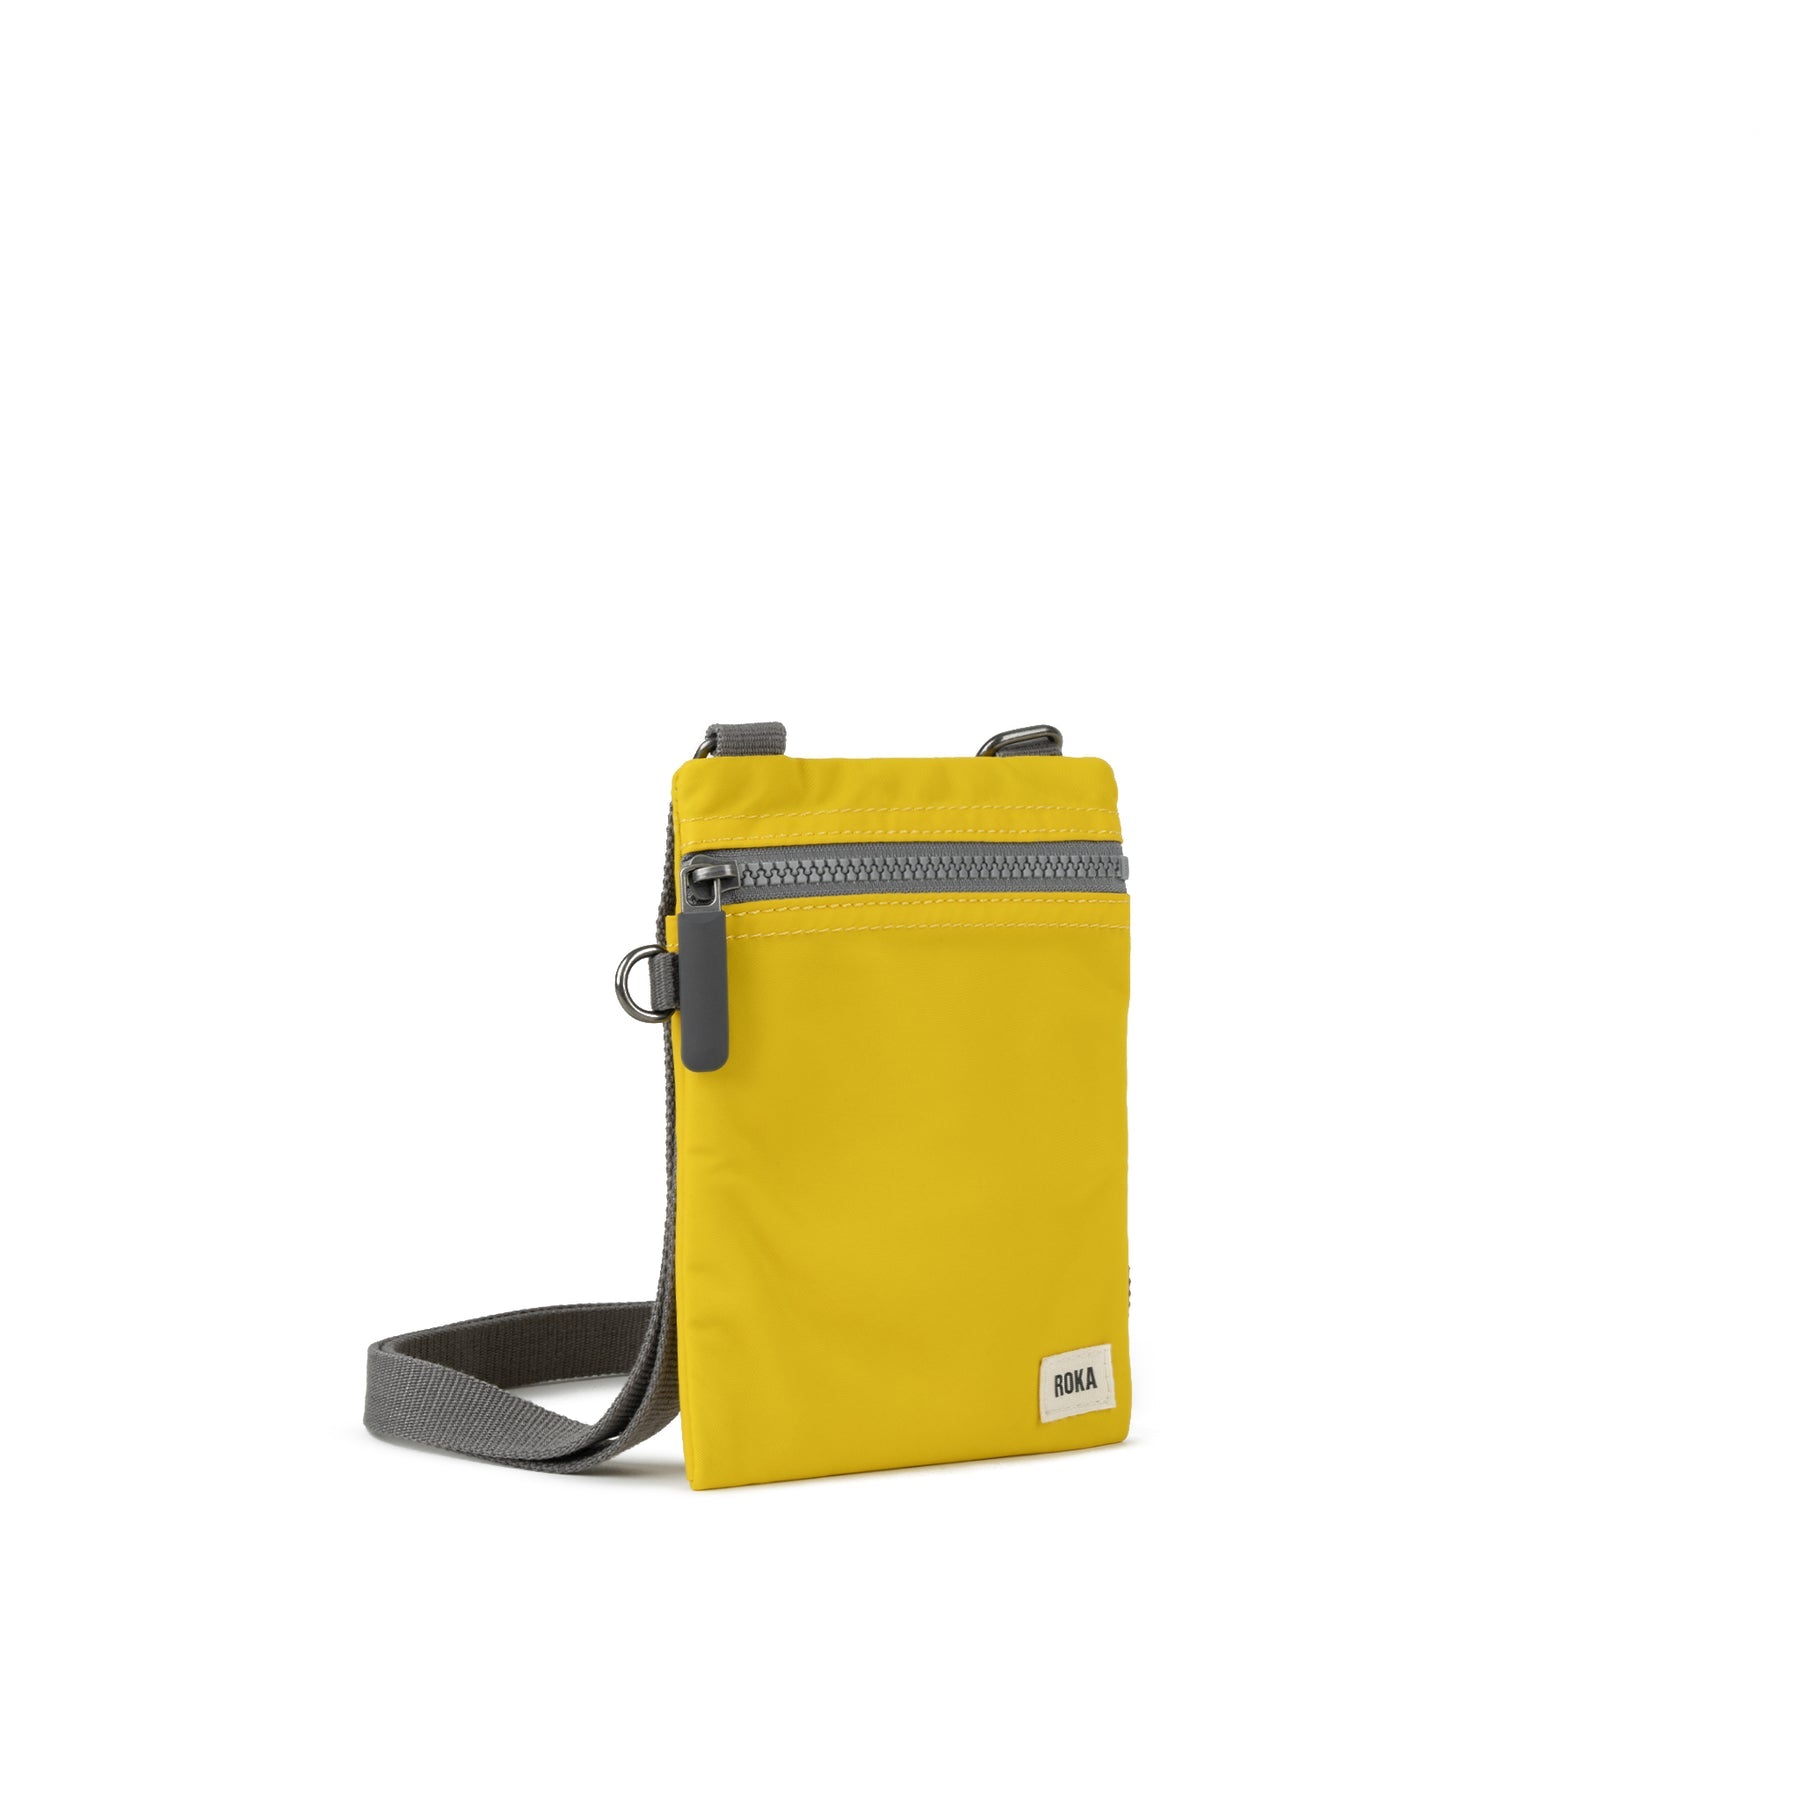 ROKA Chelsea Mustard One Size Recycled Nylon Bag - OS